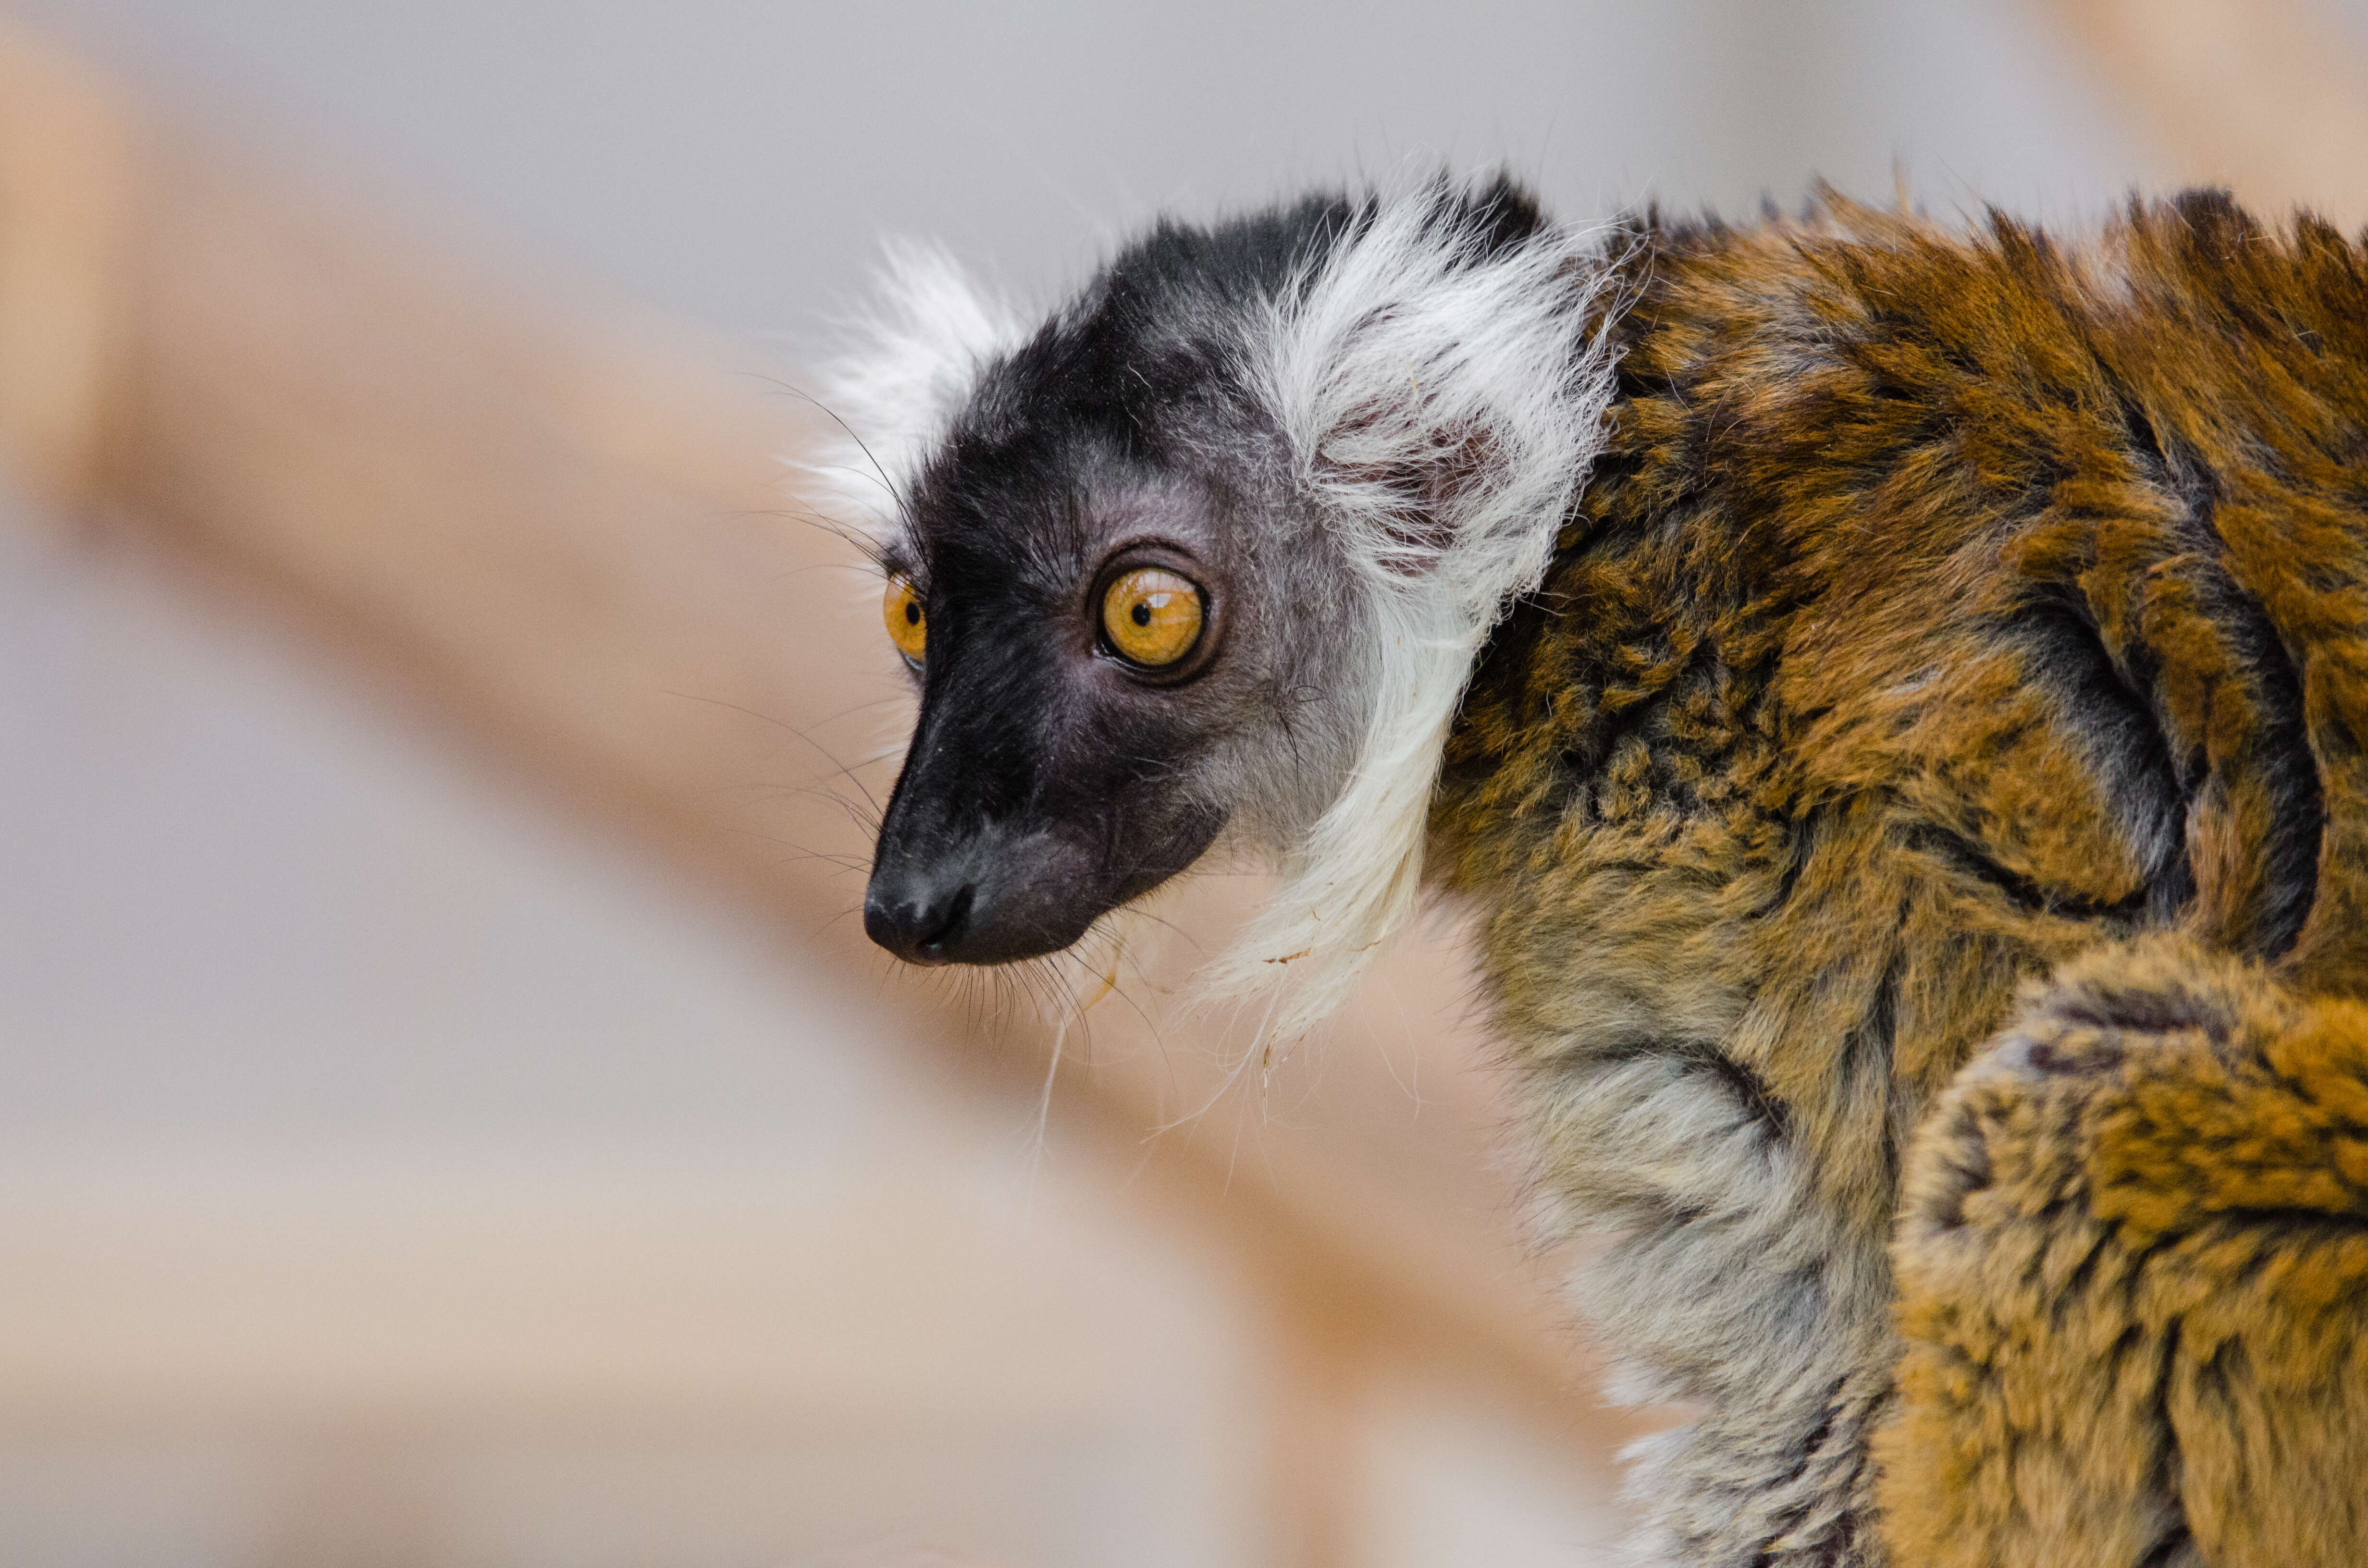 Image of Sanford's Brown Lemur